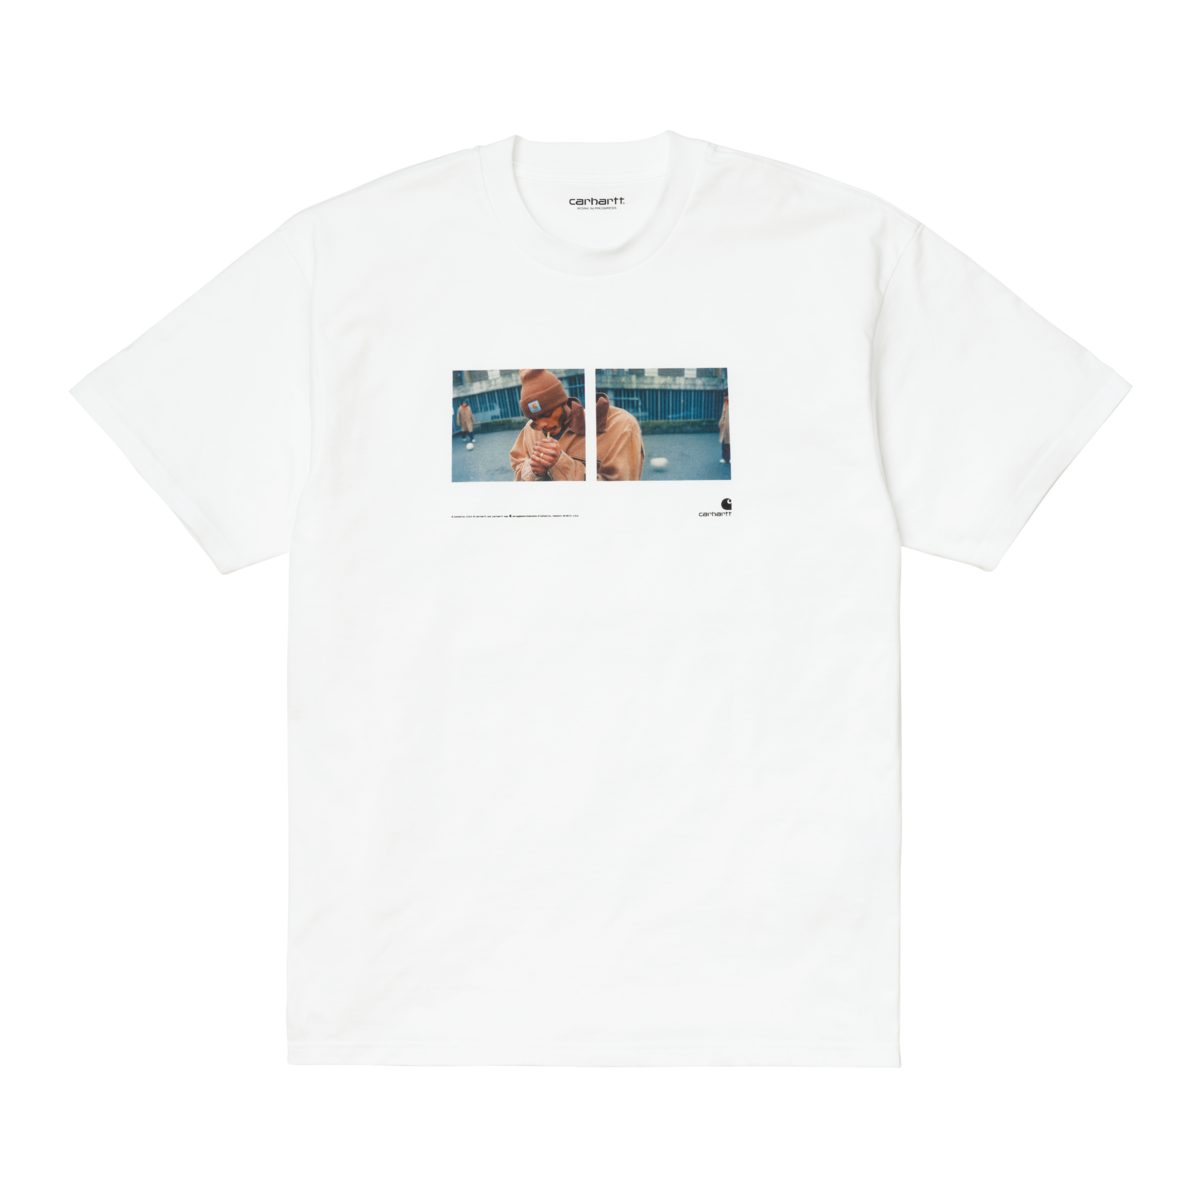 Carhartt White T-shirt S/S Backyard